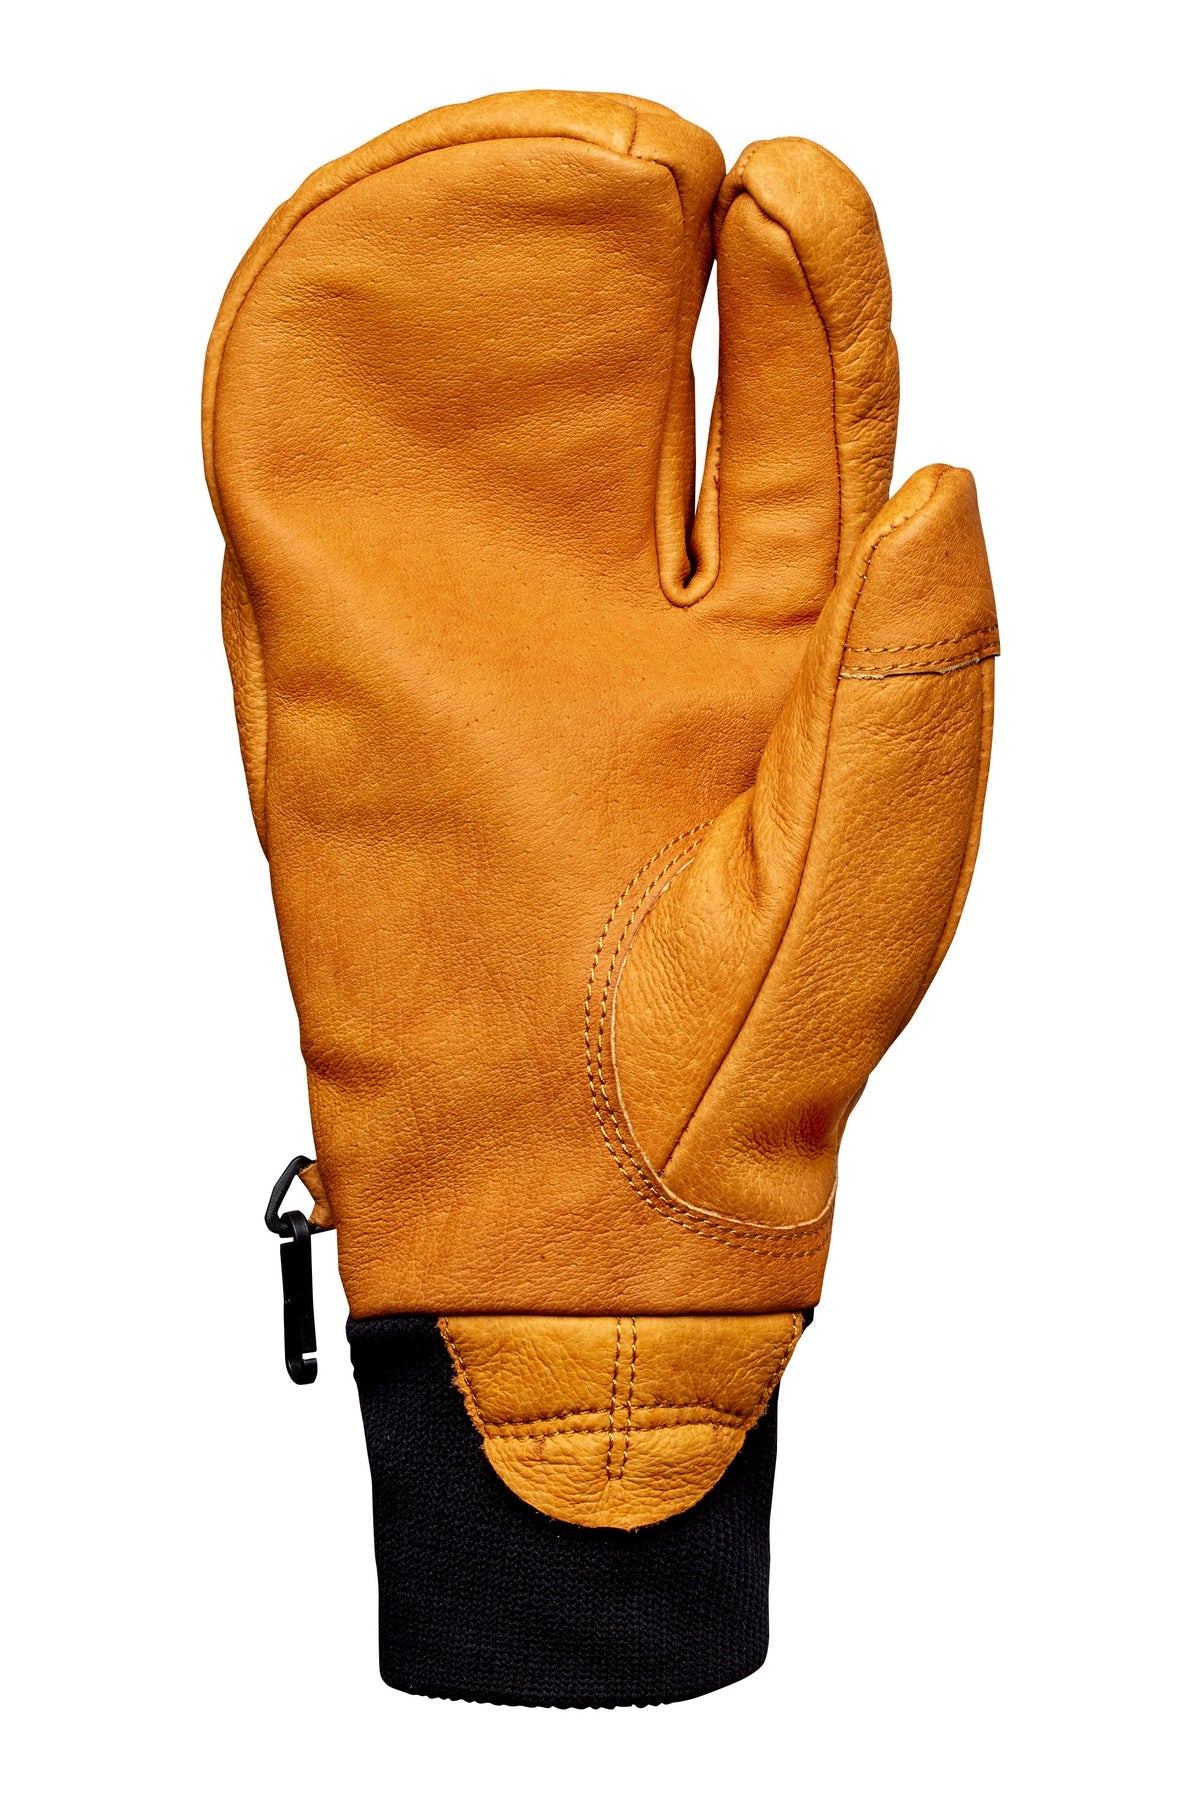 Maine Line Glove